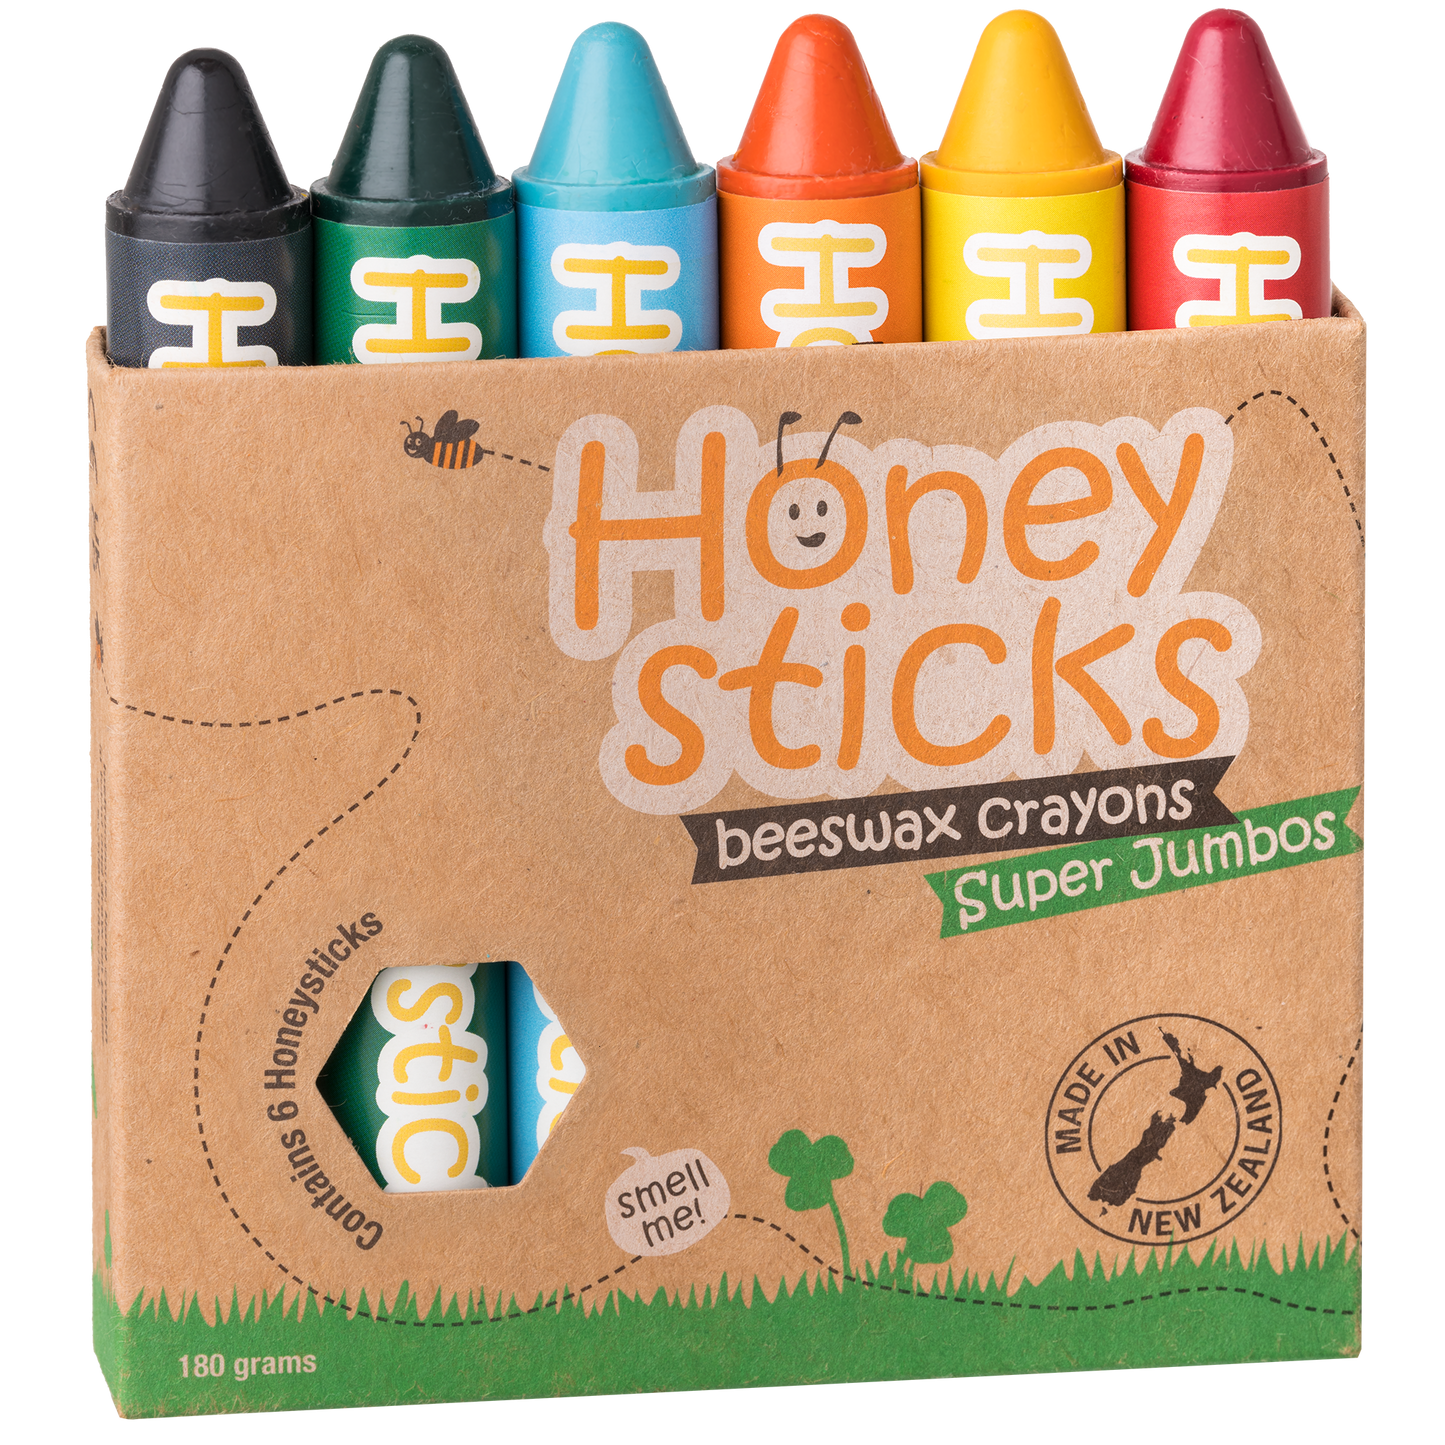 Honeysticks Super Jumbos by Honeysticks USA